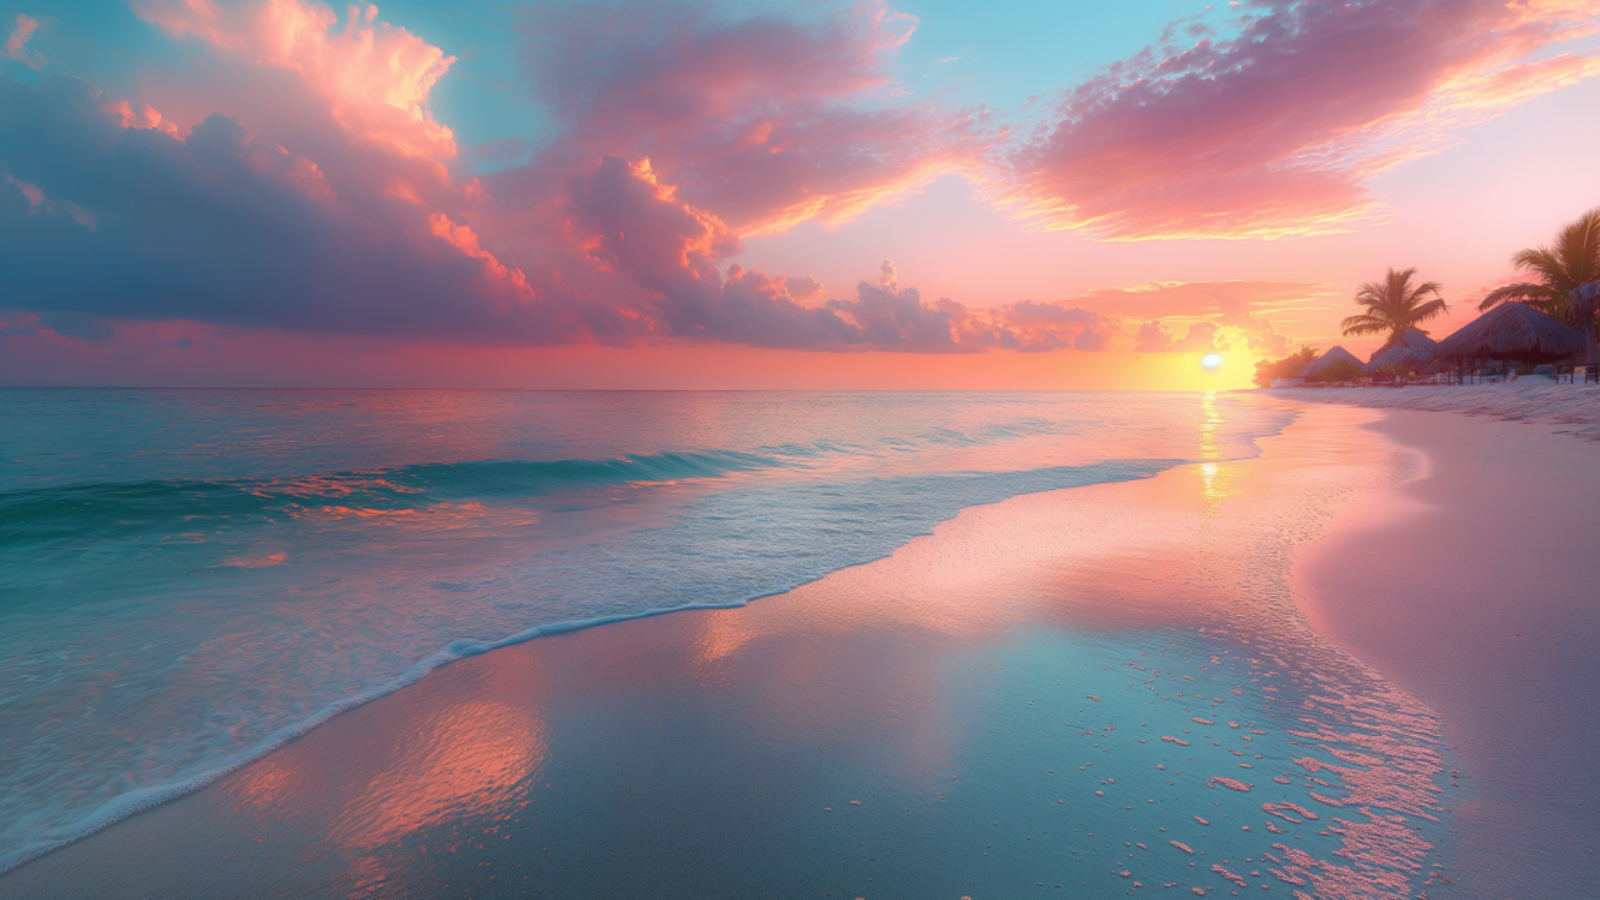 Sunrise over Mamitas Beach with pink and orange skies.